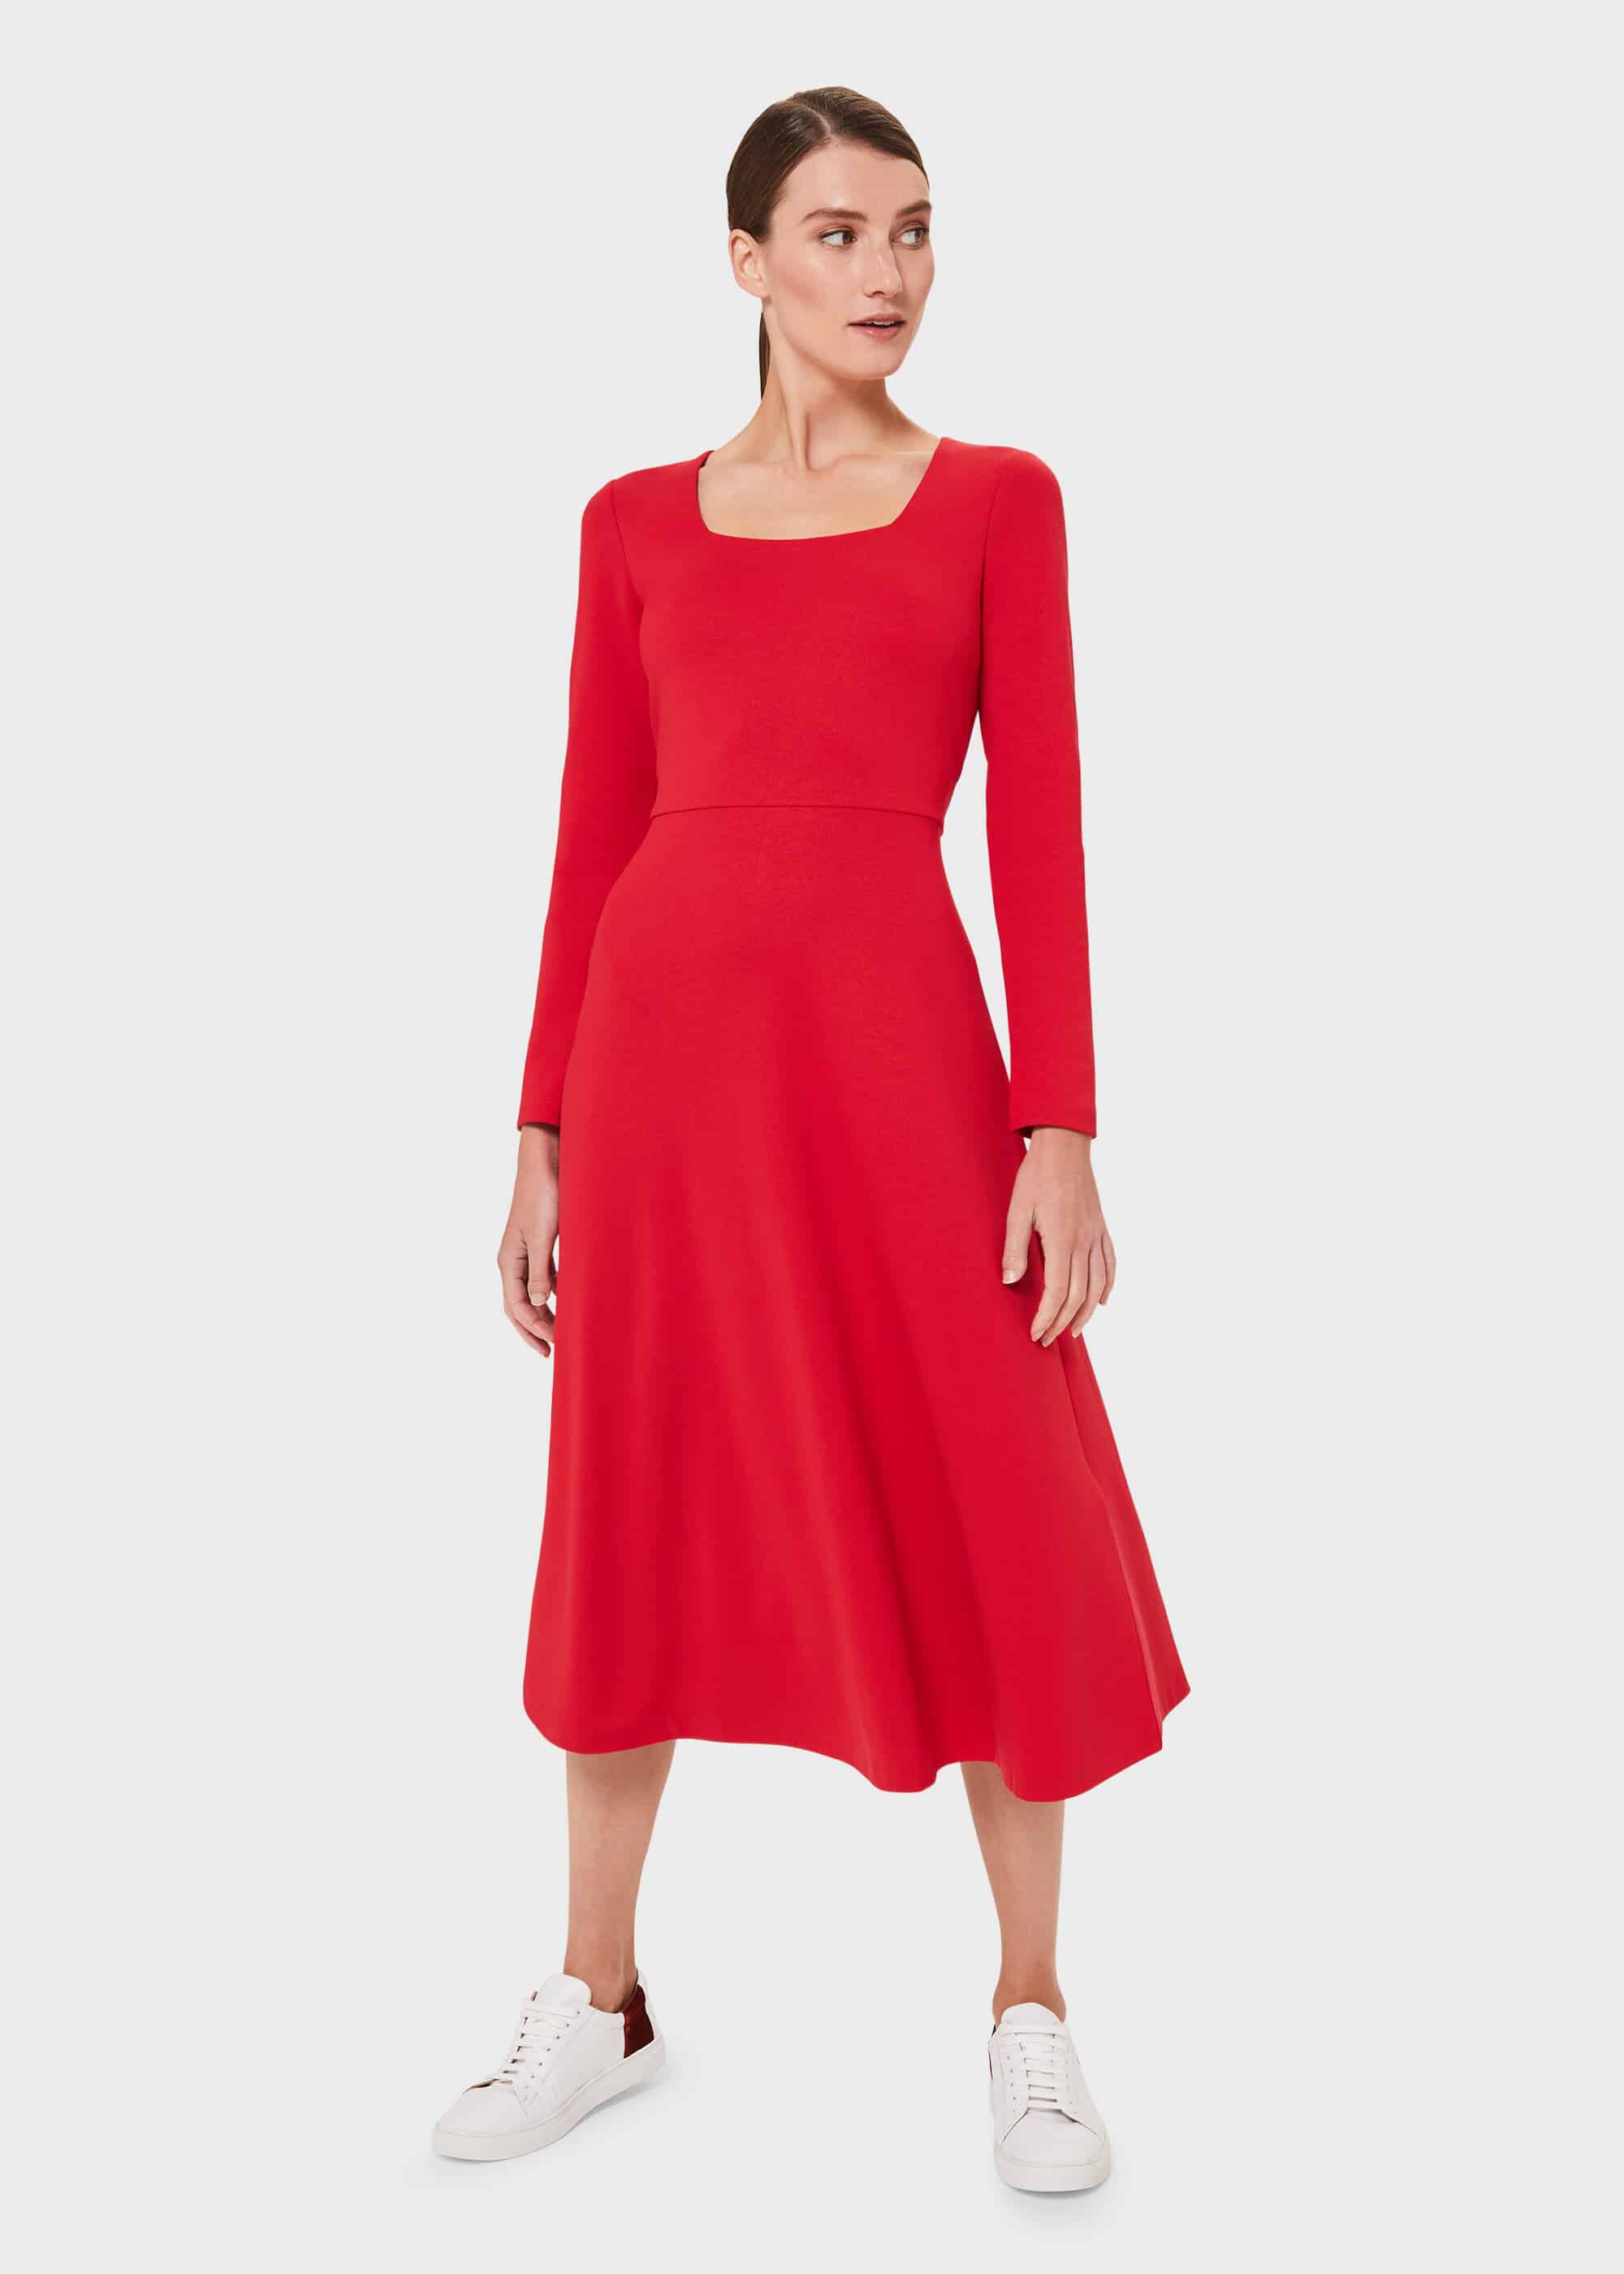 hobbs red dress sale